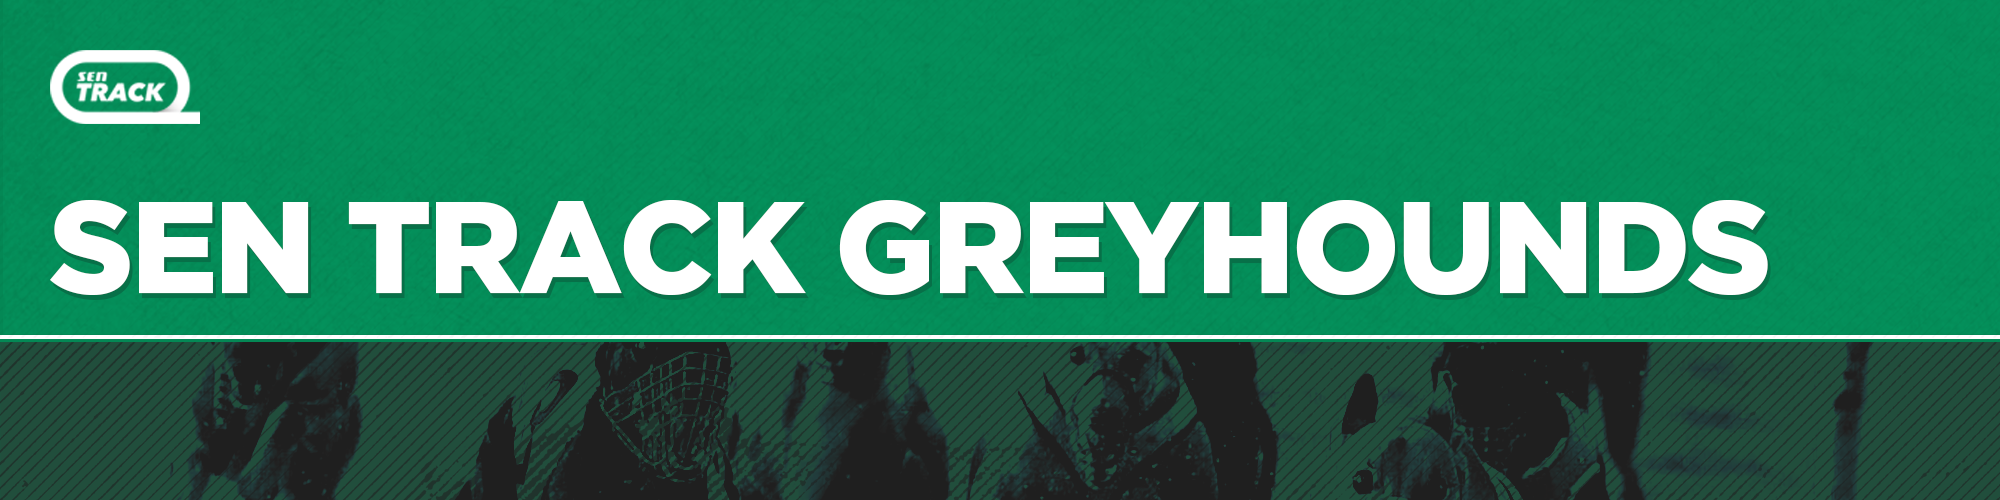 SENTrack-Greyhounds banner